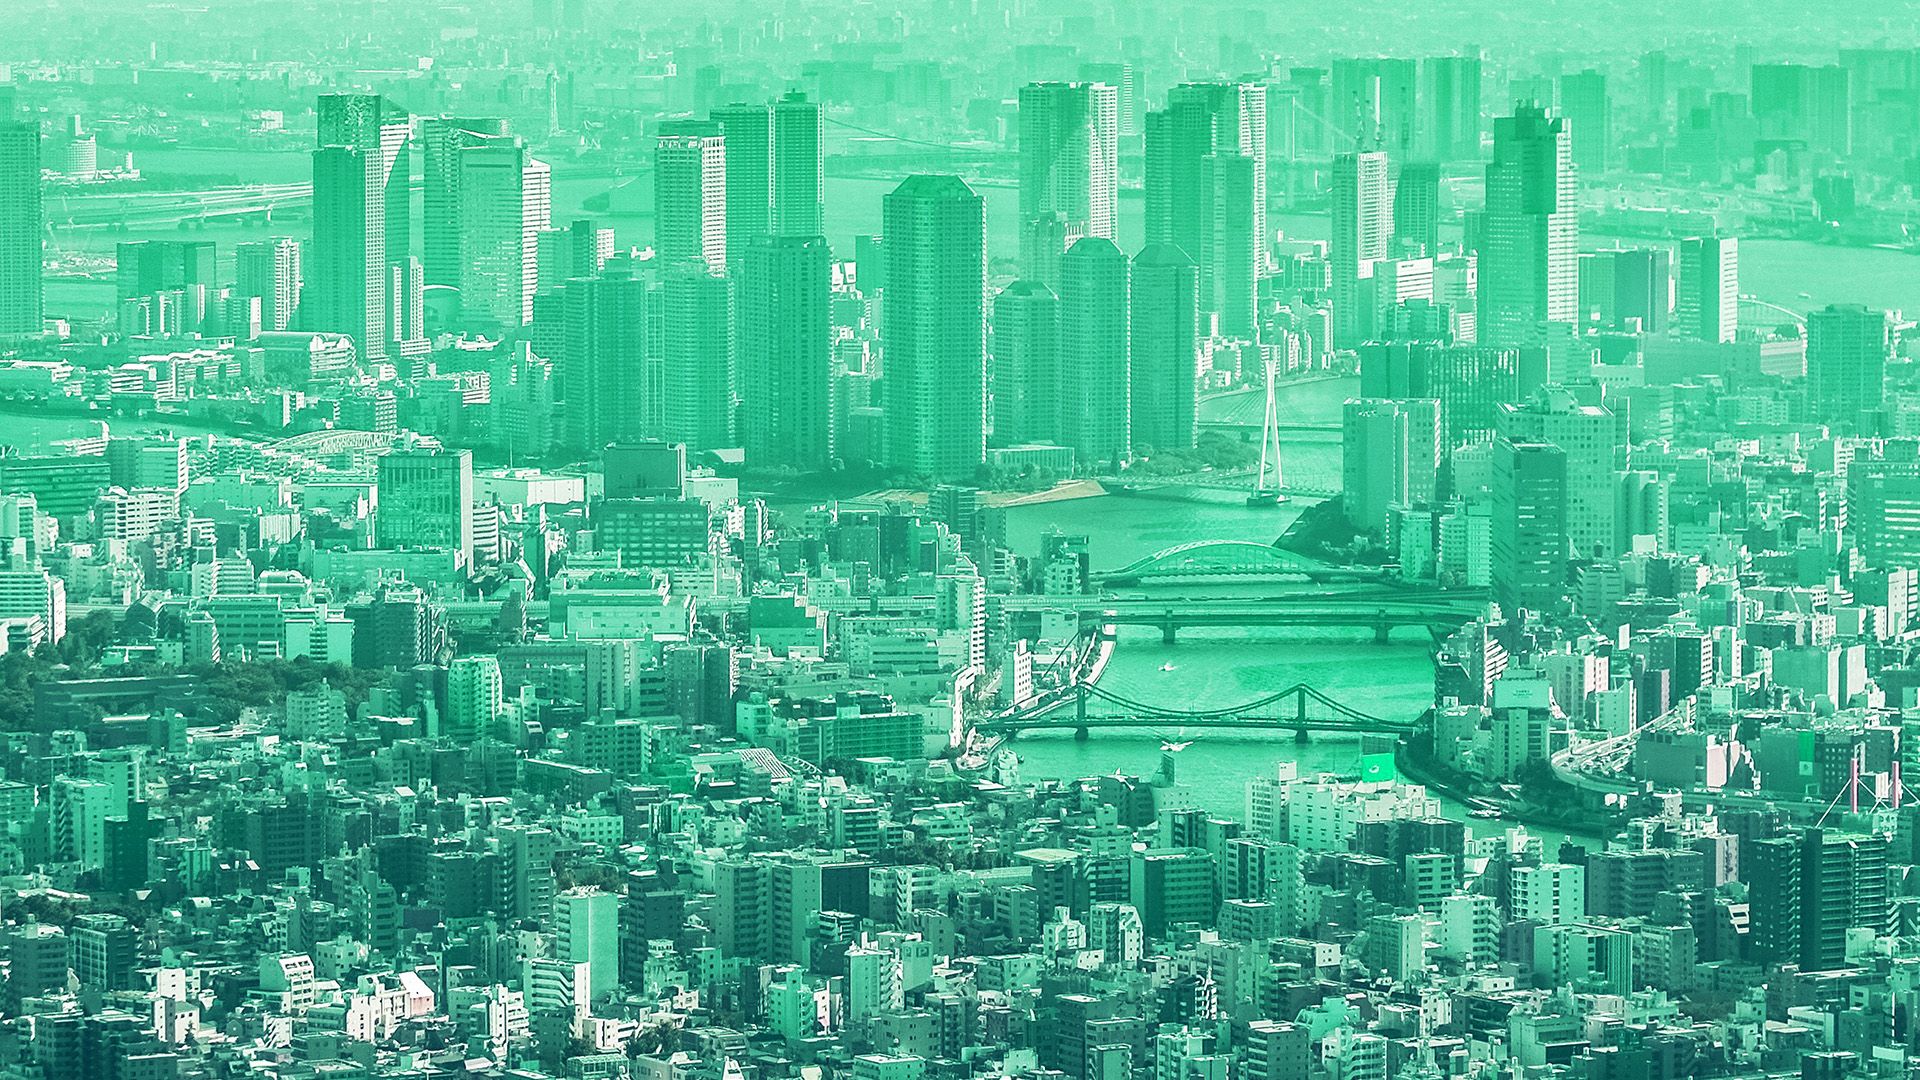 wallpaper for desktop, laptop. green city cloud metropolitan urban building